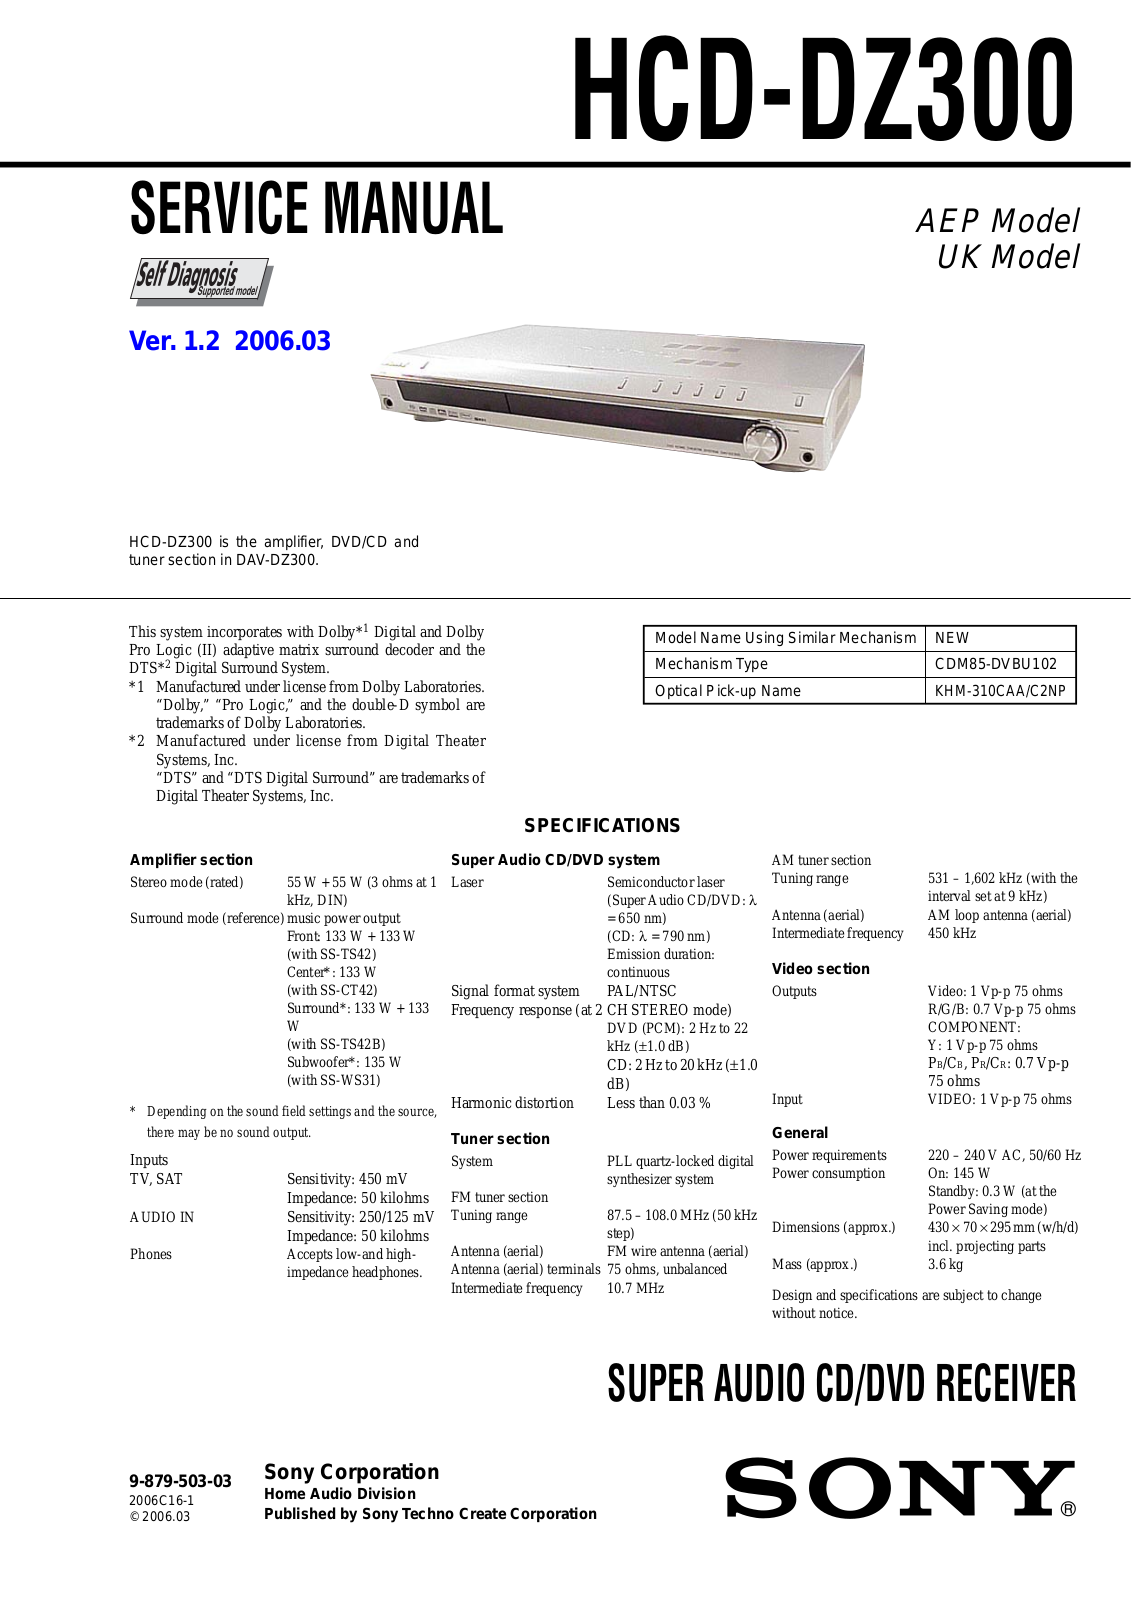 Sony HCD-DZ300 Service Manual